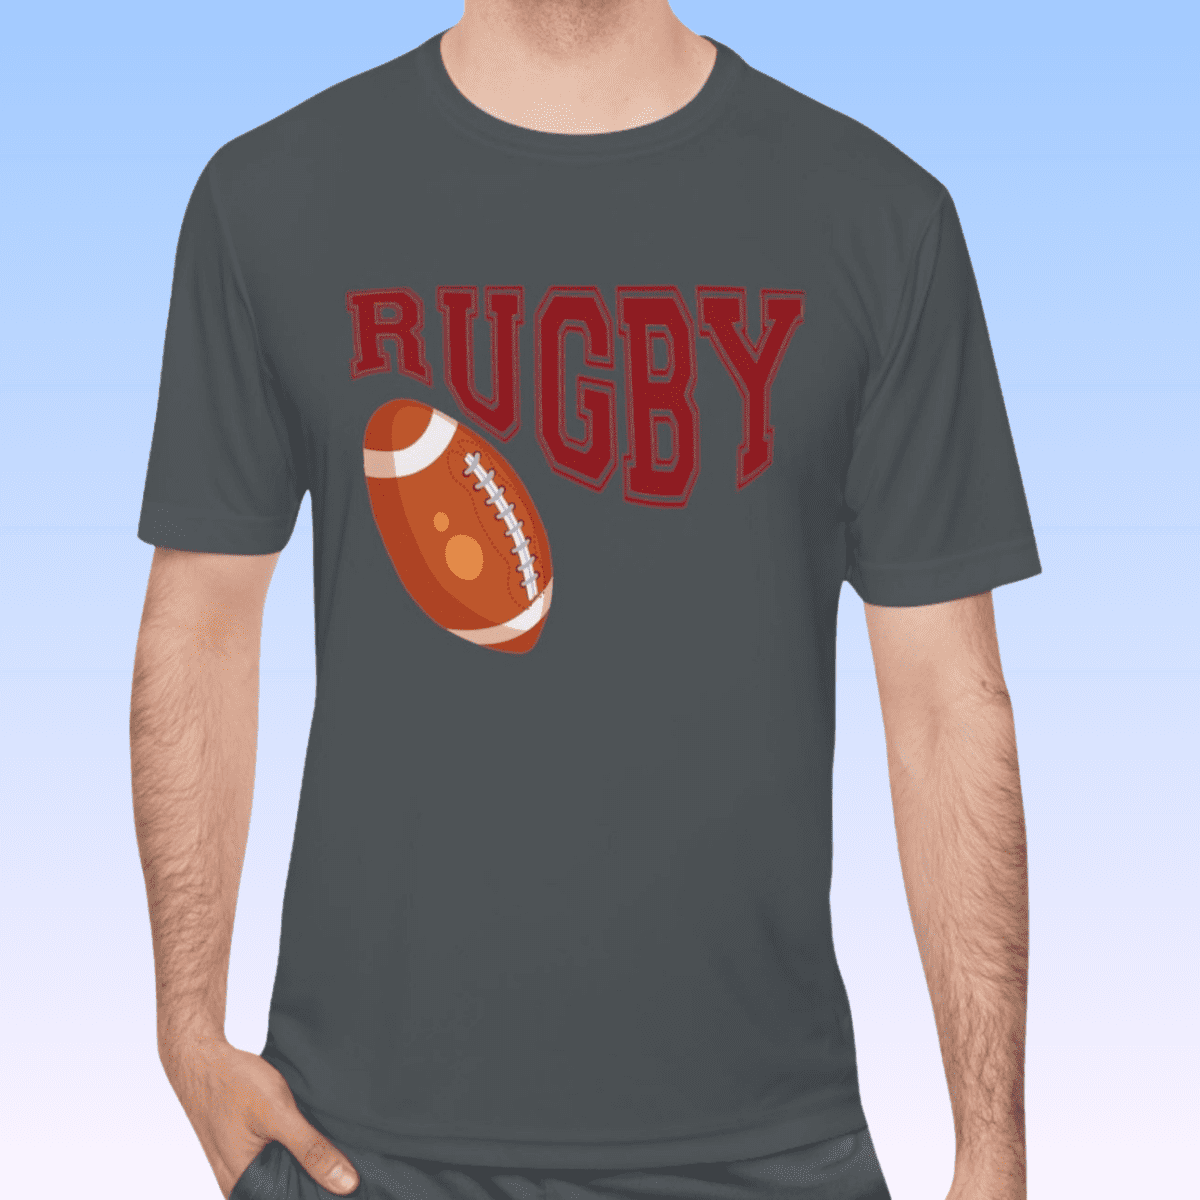 Men's Iron Grey Rugby Moisture Wicking Tee